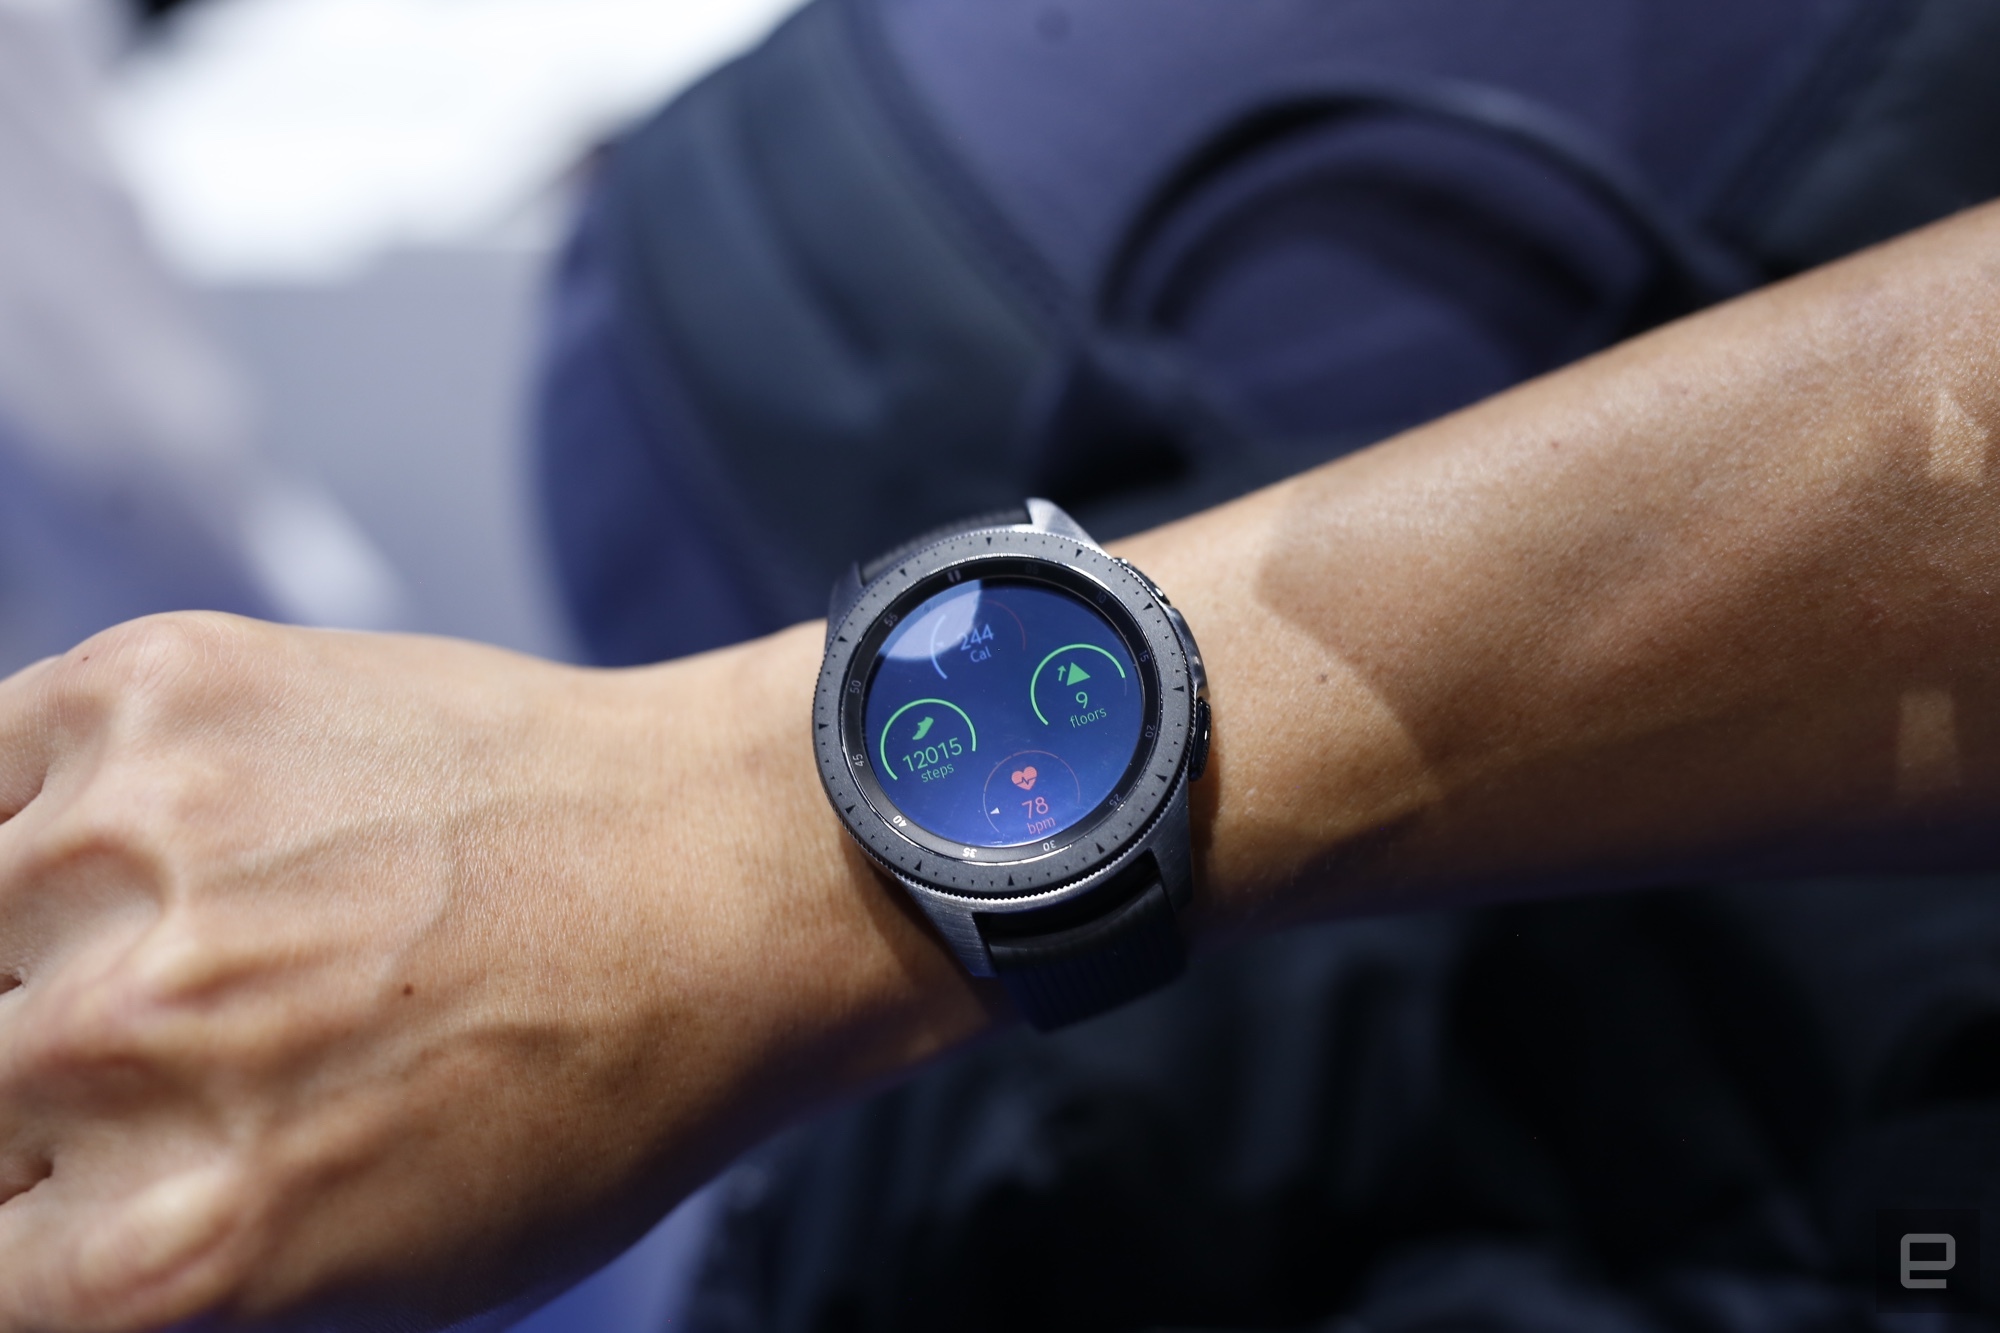 Samsung galaxy watch сравнение. Часы самсунг Galaxy 42mm. Умные часы Samsung Galaxy watch 42mm. Galaxy watch 42mm (2018). Samsung Galaxy watch 42mm на руке.